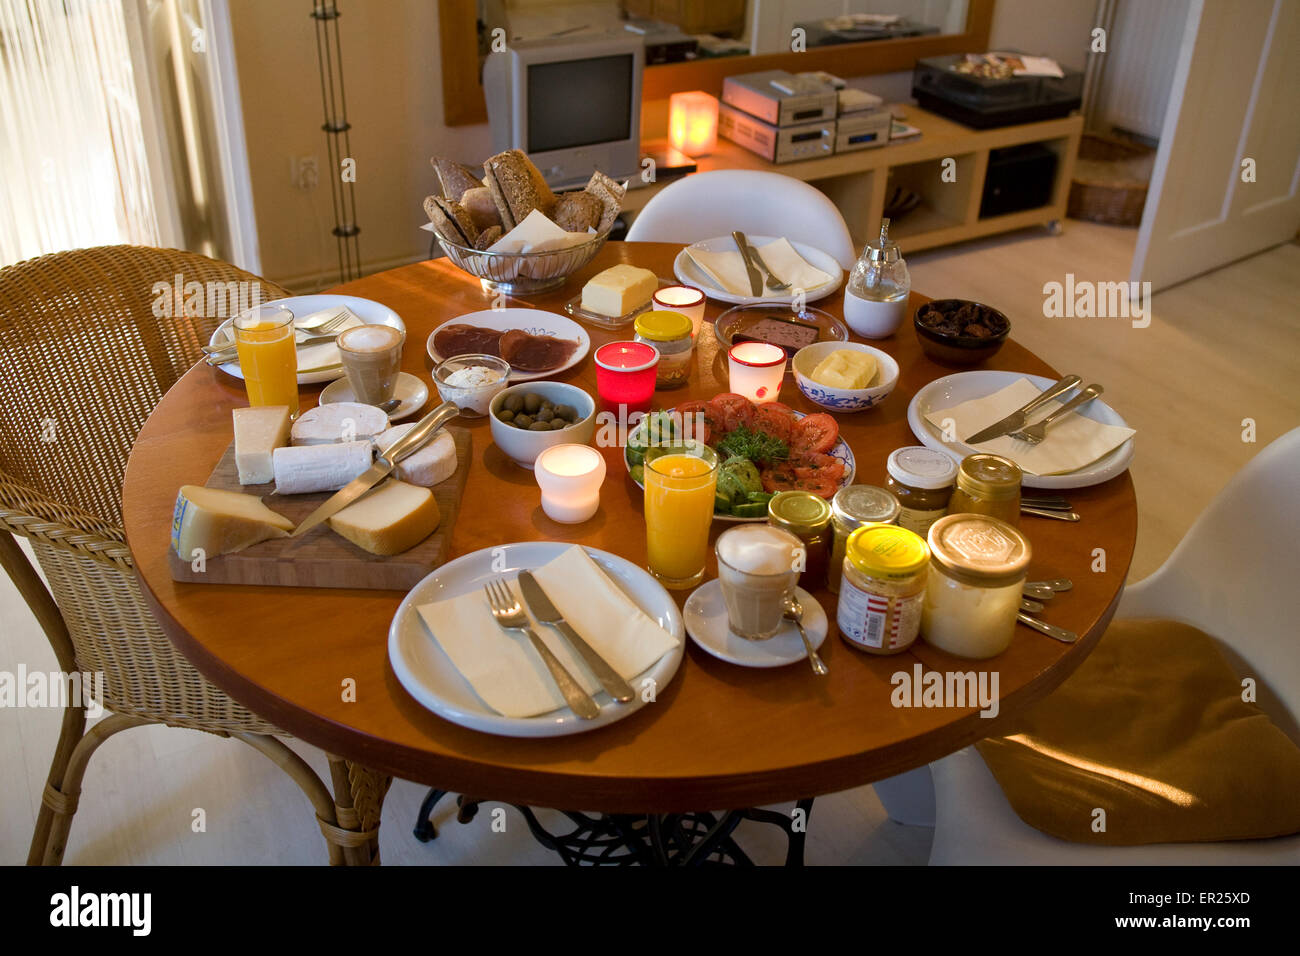 L'Europe, l'Allemagne, une table de petit-déjeuner bien conçus. Europa, Deutschland, gedeckter. Fruehstueckstisch Banque D'Images